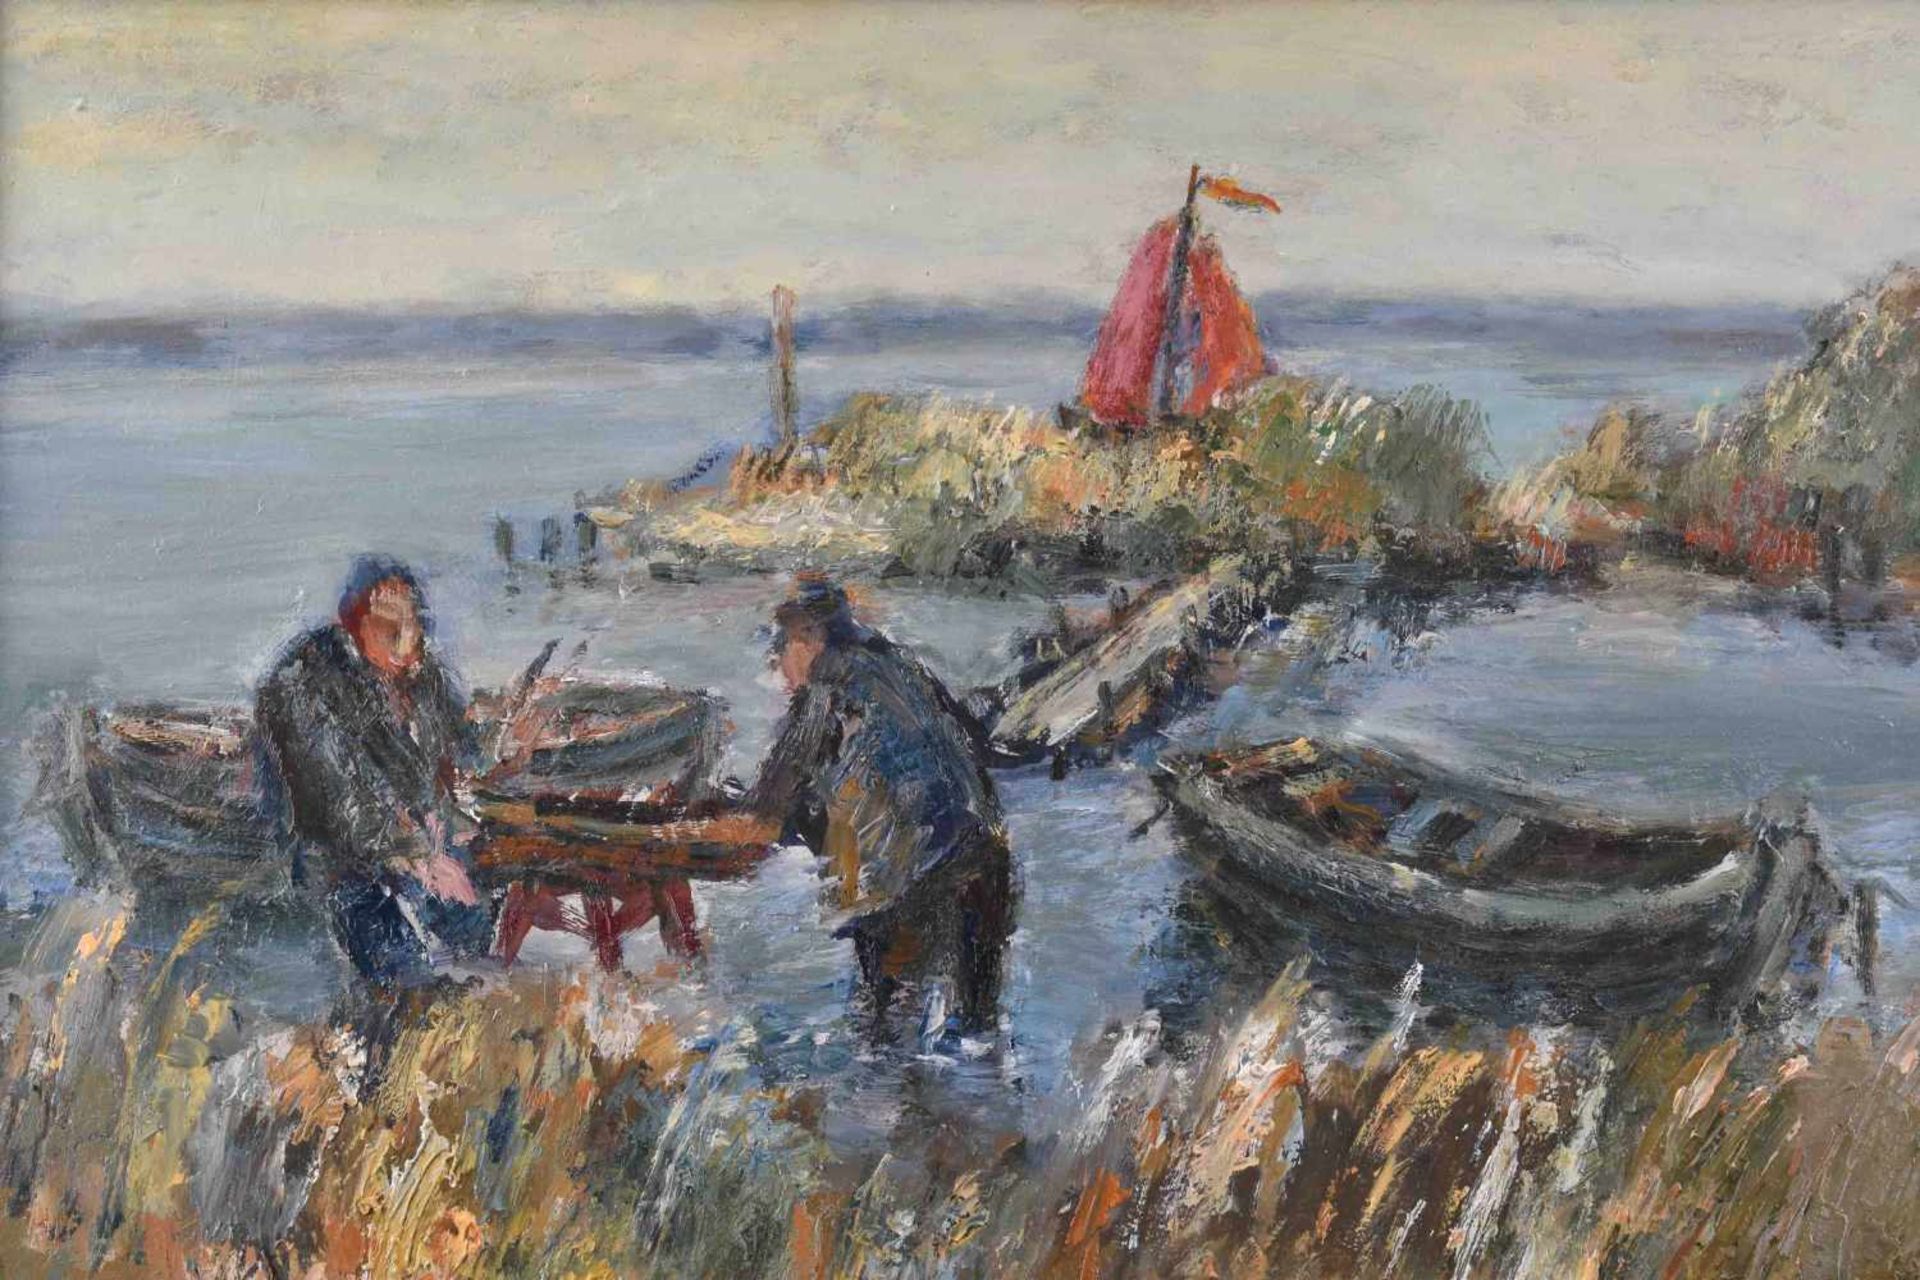 Rolf SCHUBERT (1932-2013)"Boddenfischer" (1969)painting oil / hardboard, 30 cm x 40 cm,signed and